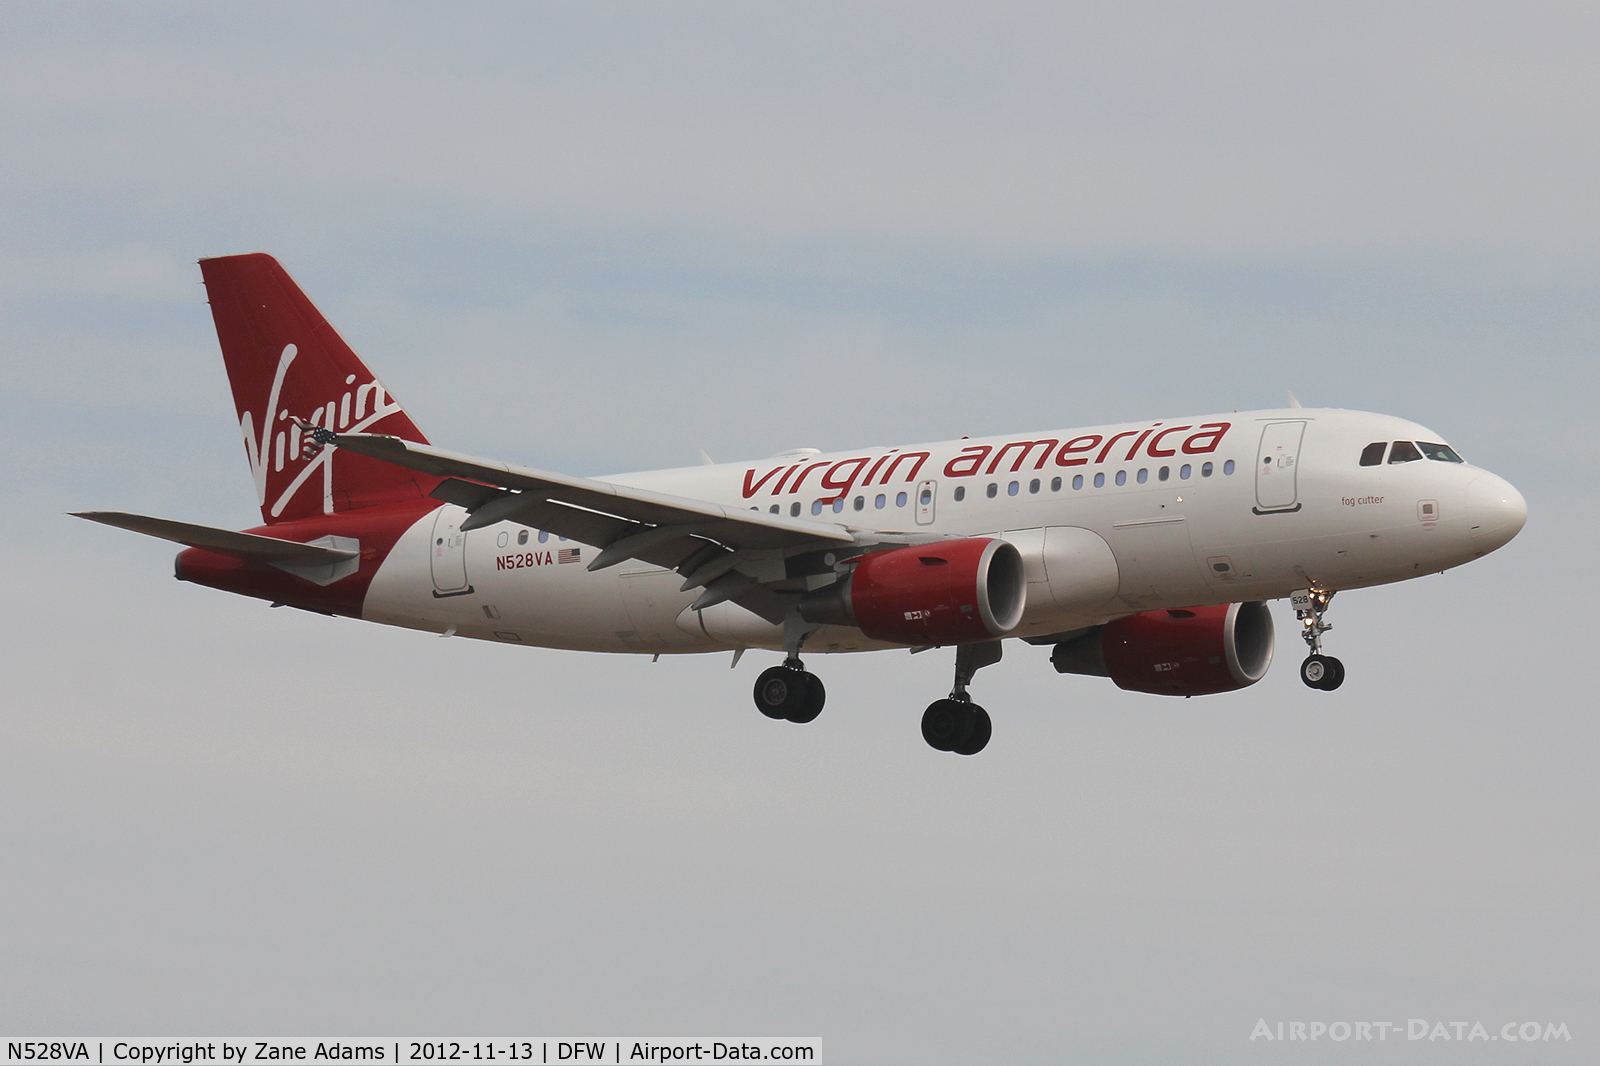 N528VA, 2008 Airbus A319-112 C/N 3445, Virgin America landing at DFW Airport